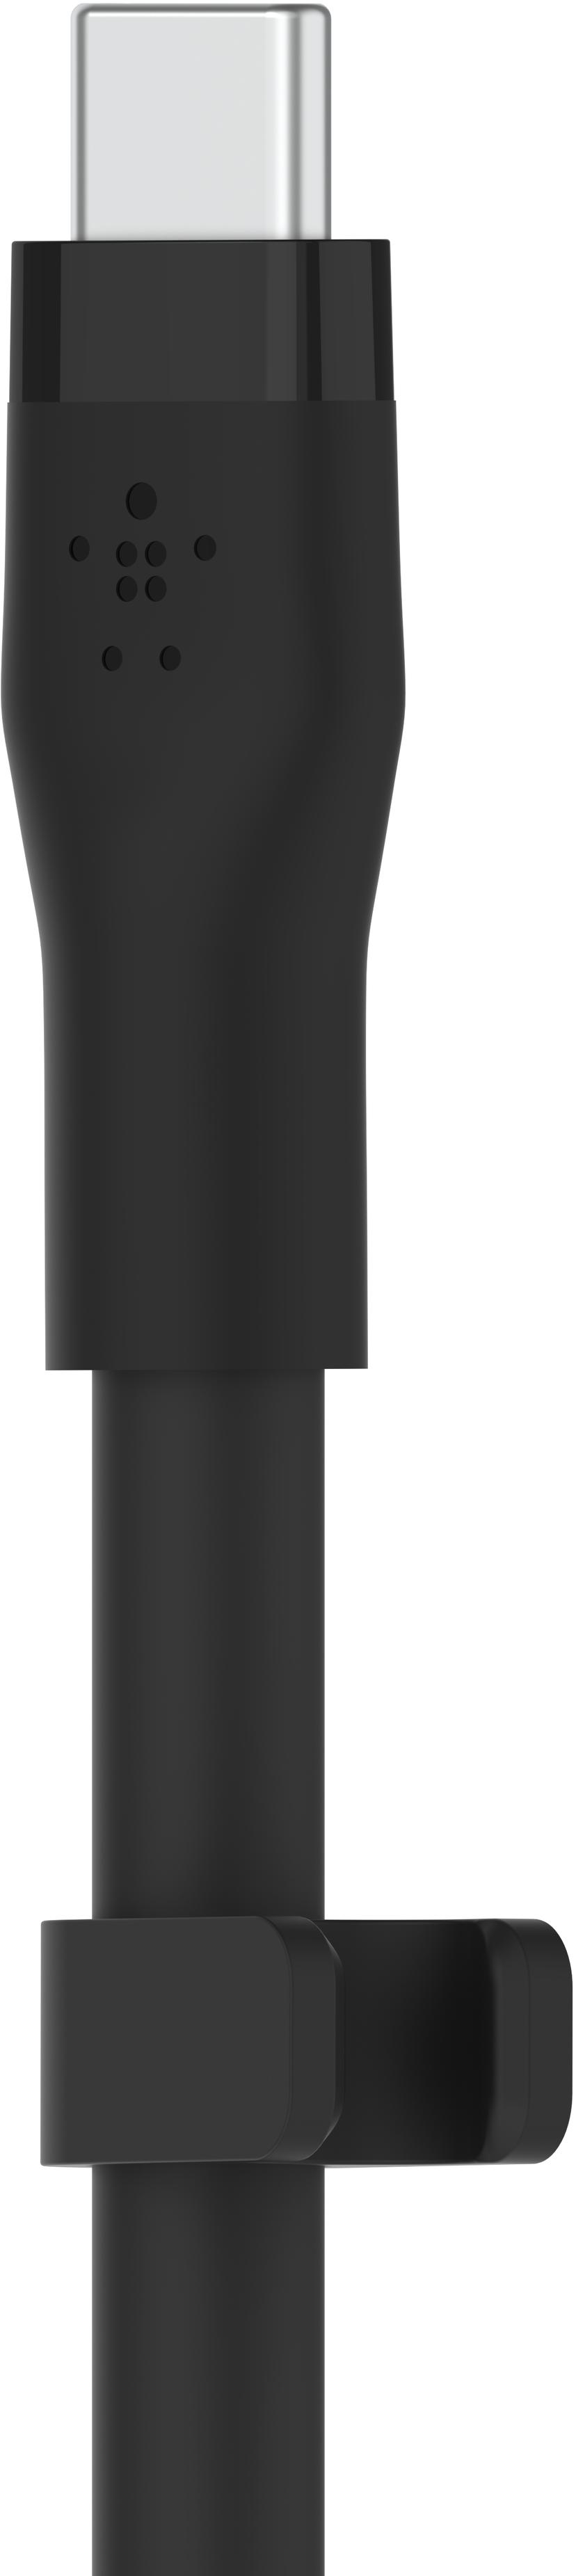 Belkin Flex USB-C to Lightning Cabel Silicone 3m Musta